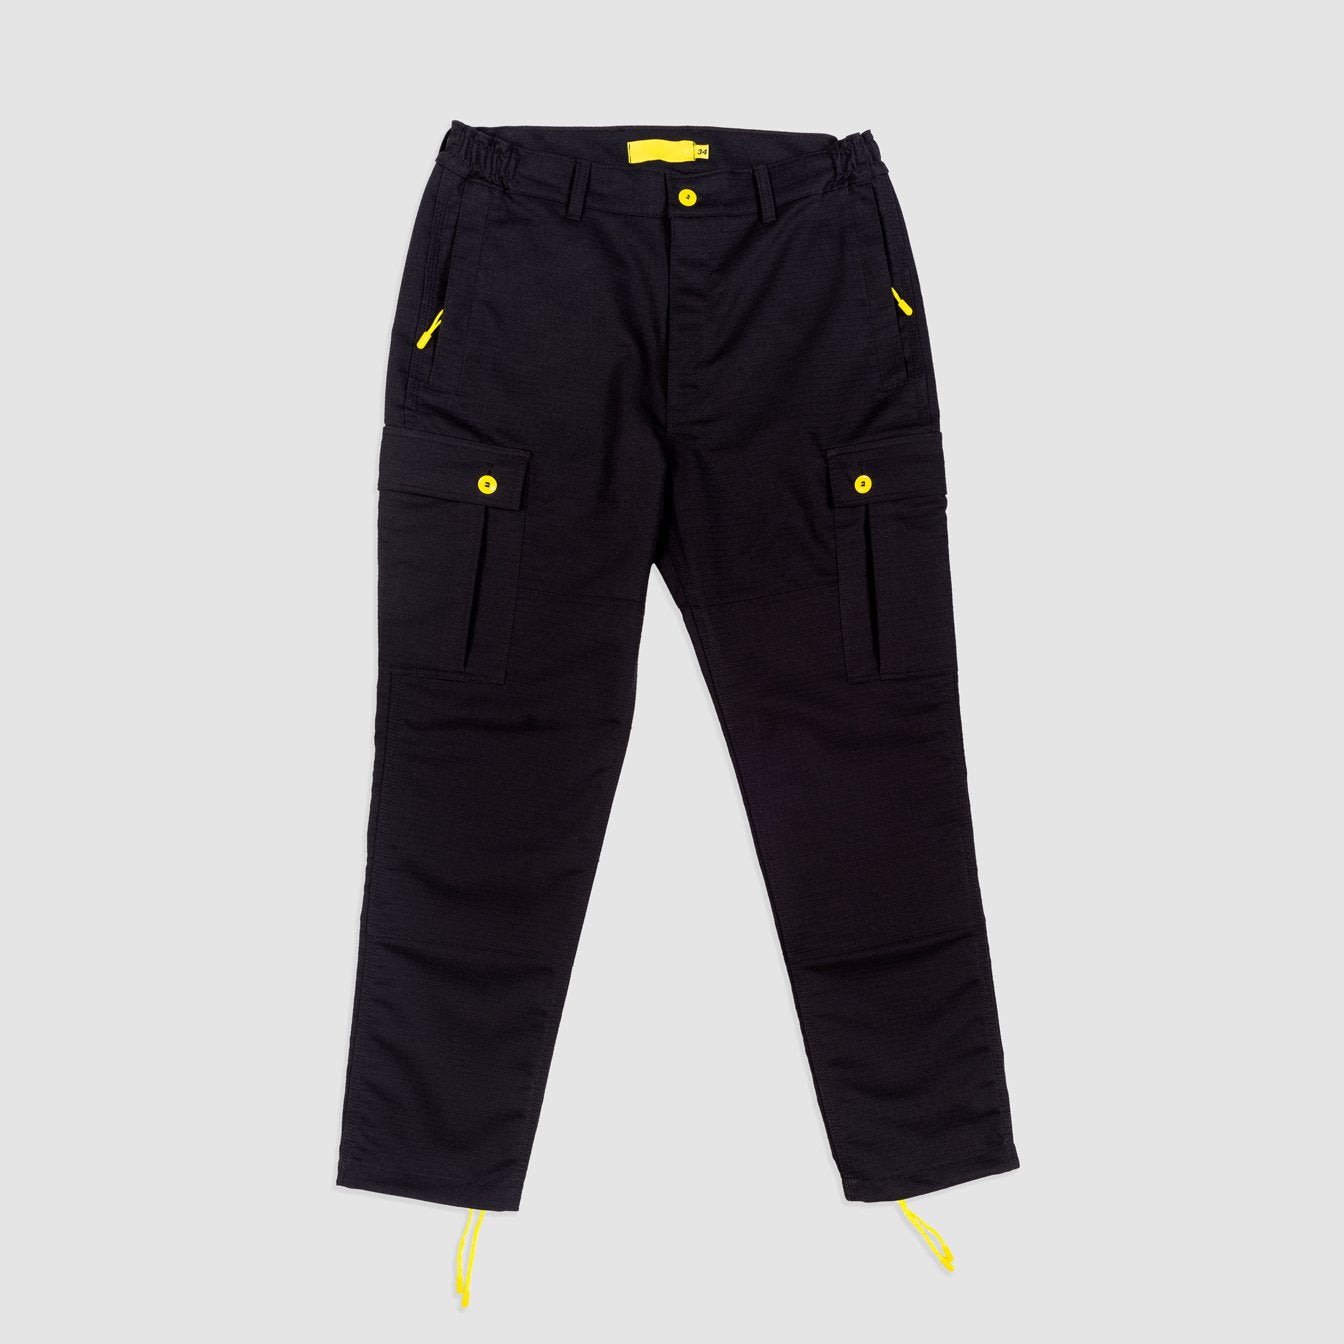 Black Cargo Pants (3122509)